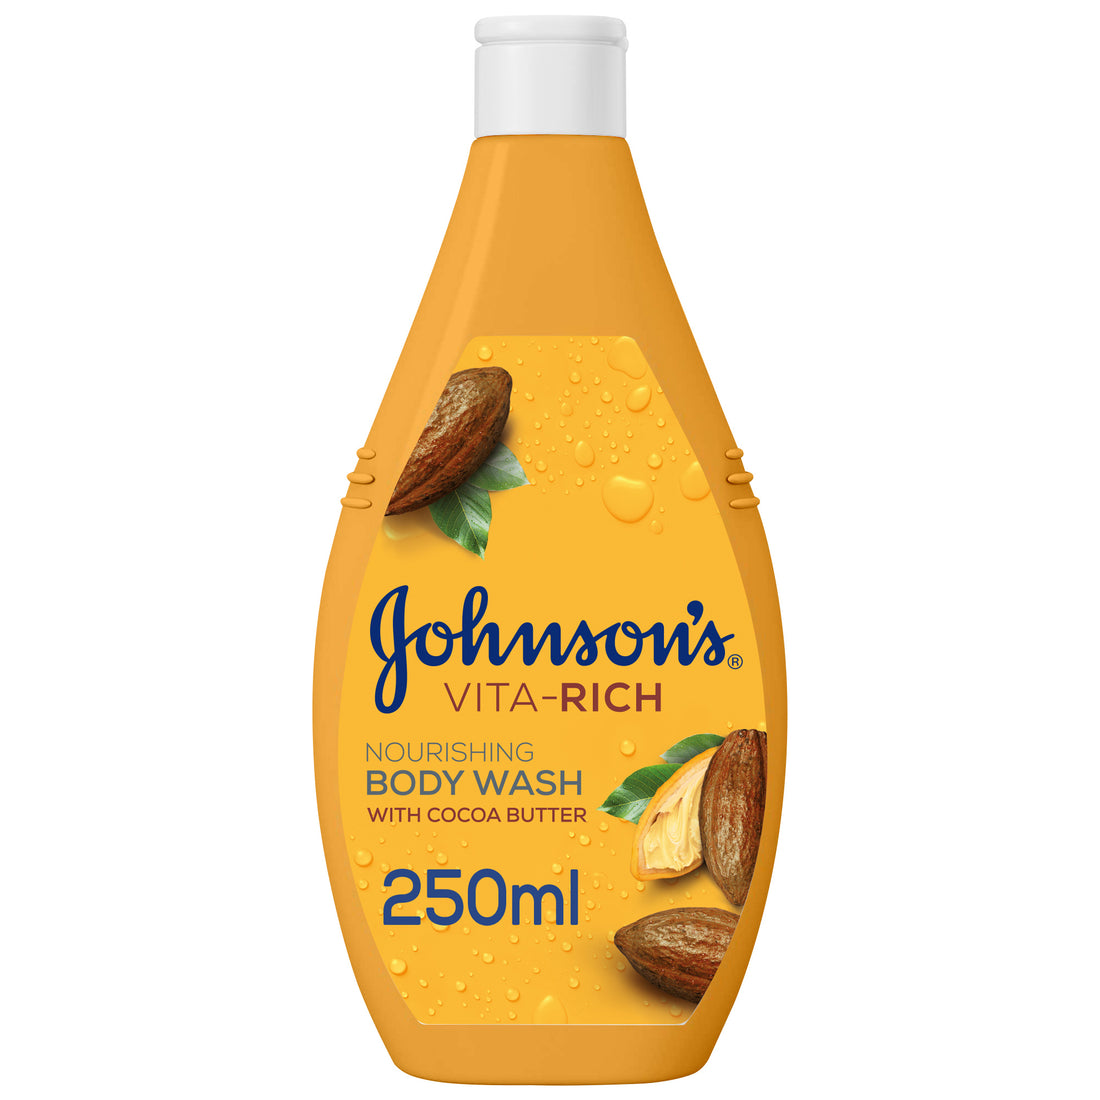 JOHNSON’S Body Wash - Vita-Rich, Nourishing Cocoa Butter, 250ml